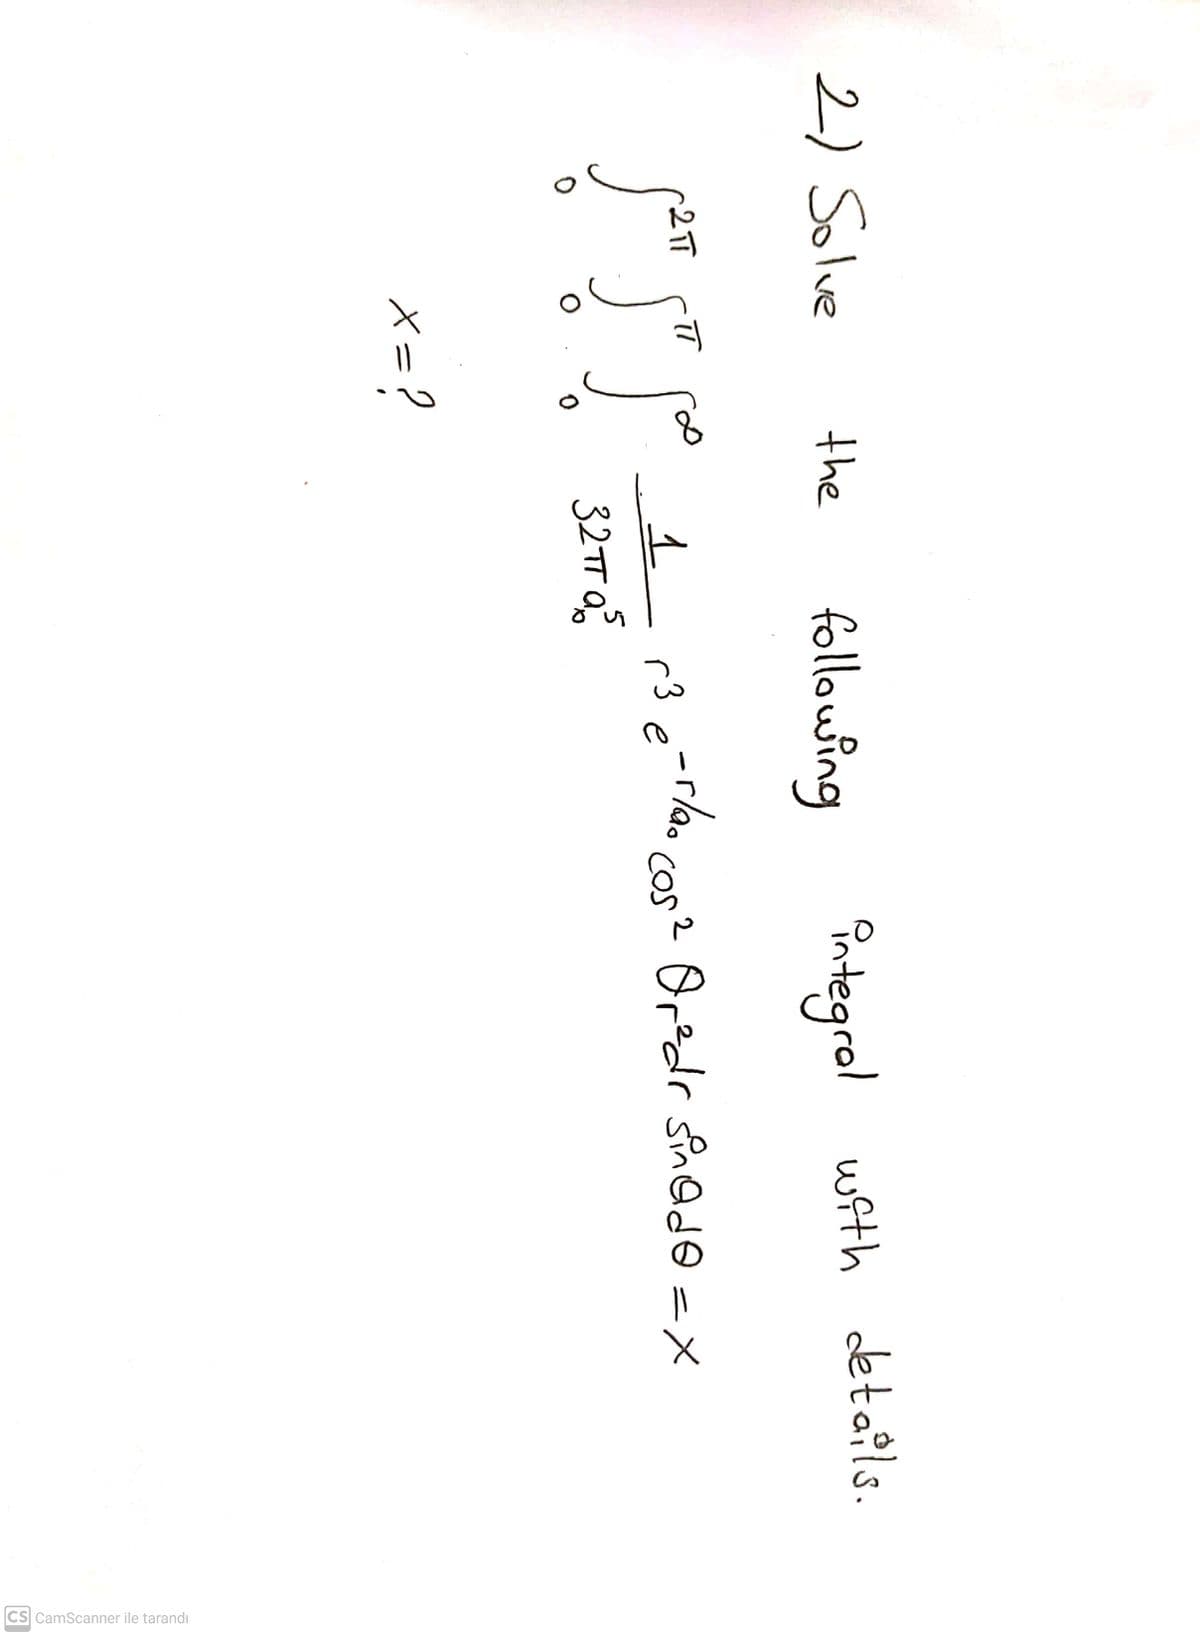 CS CamScanner ile tarandı
2) Solve
integral
with details.
the
following
2TT
(3 e-rlao
cos? Or?dr sn @do =x
32TT a
x=?
